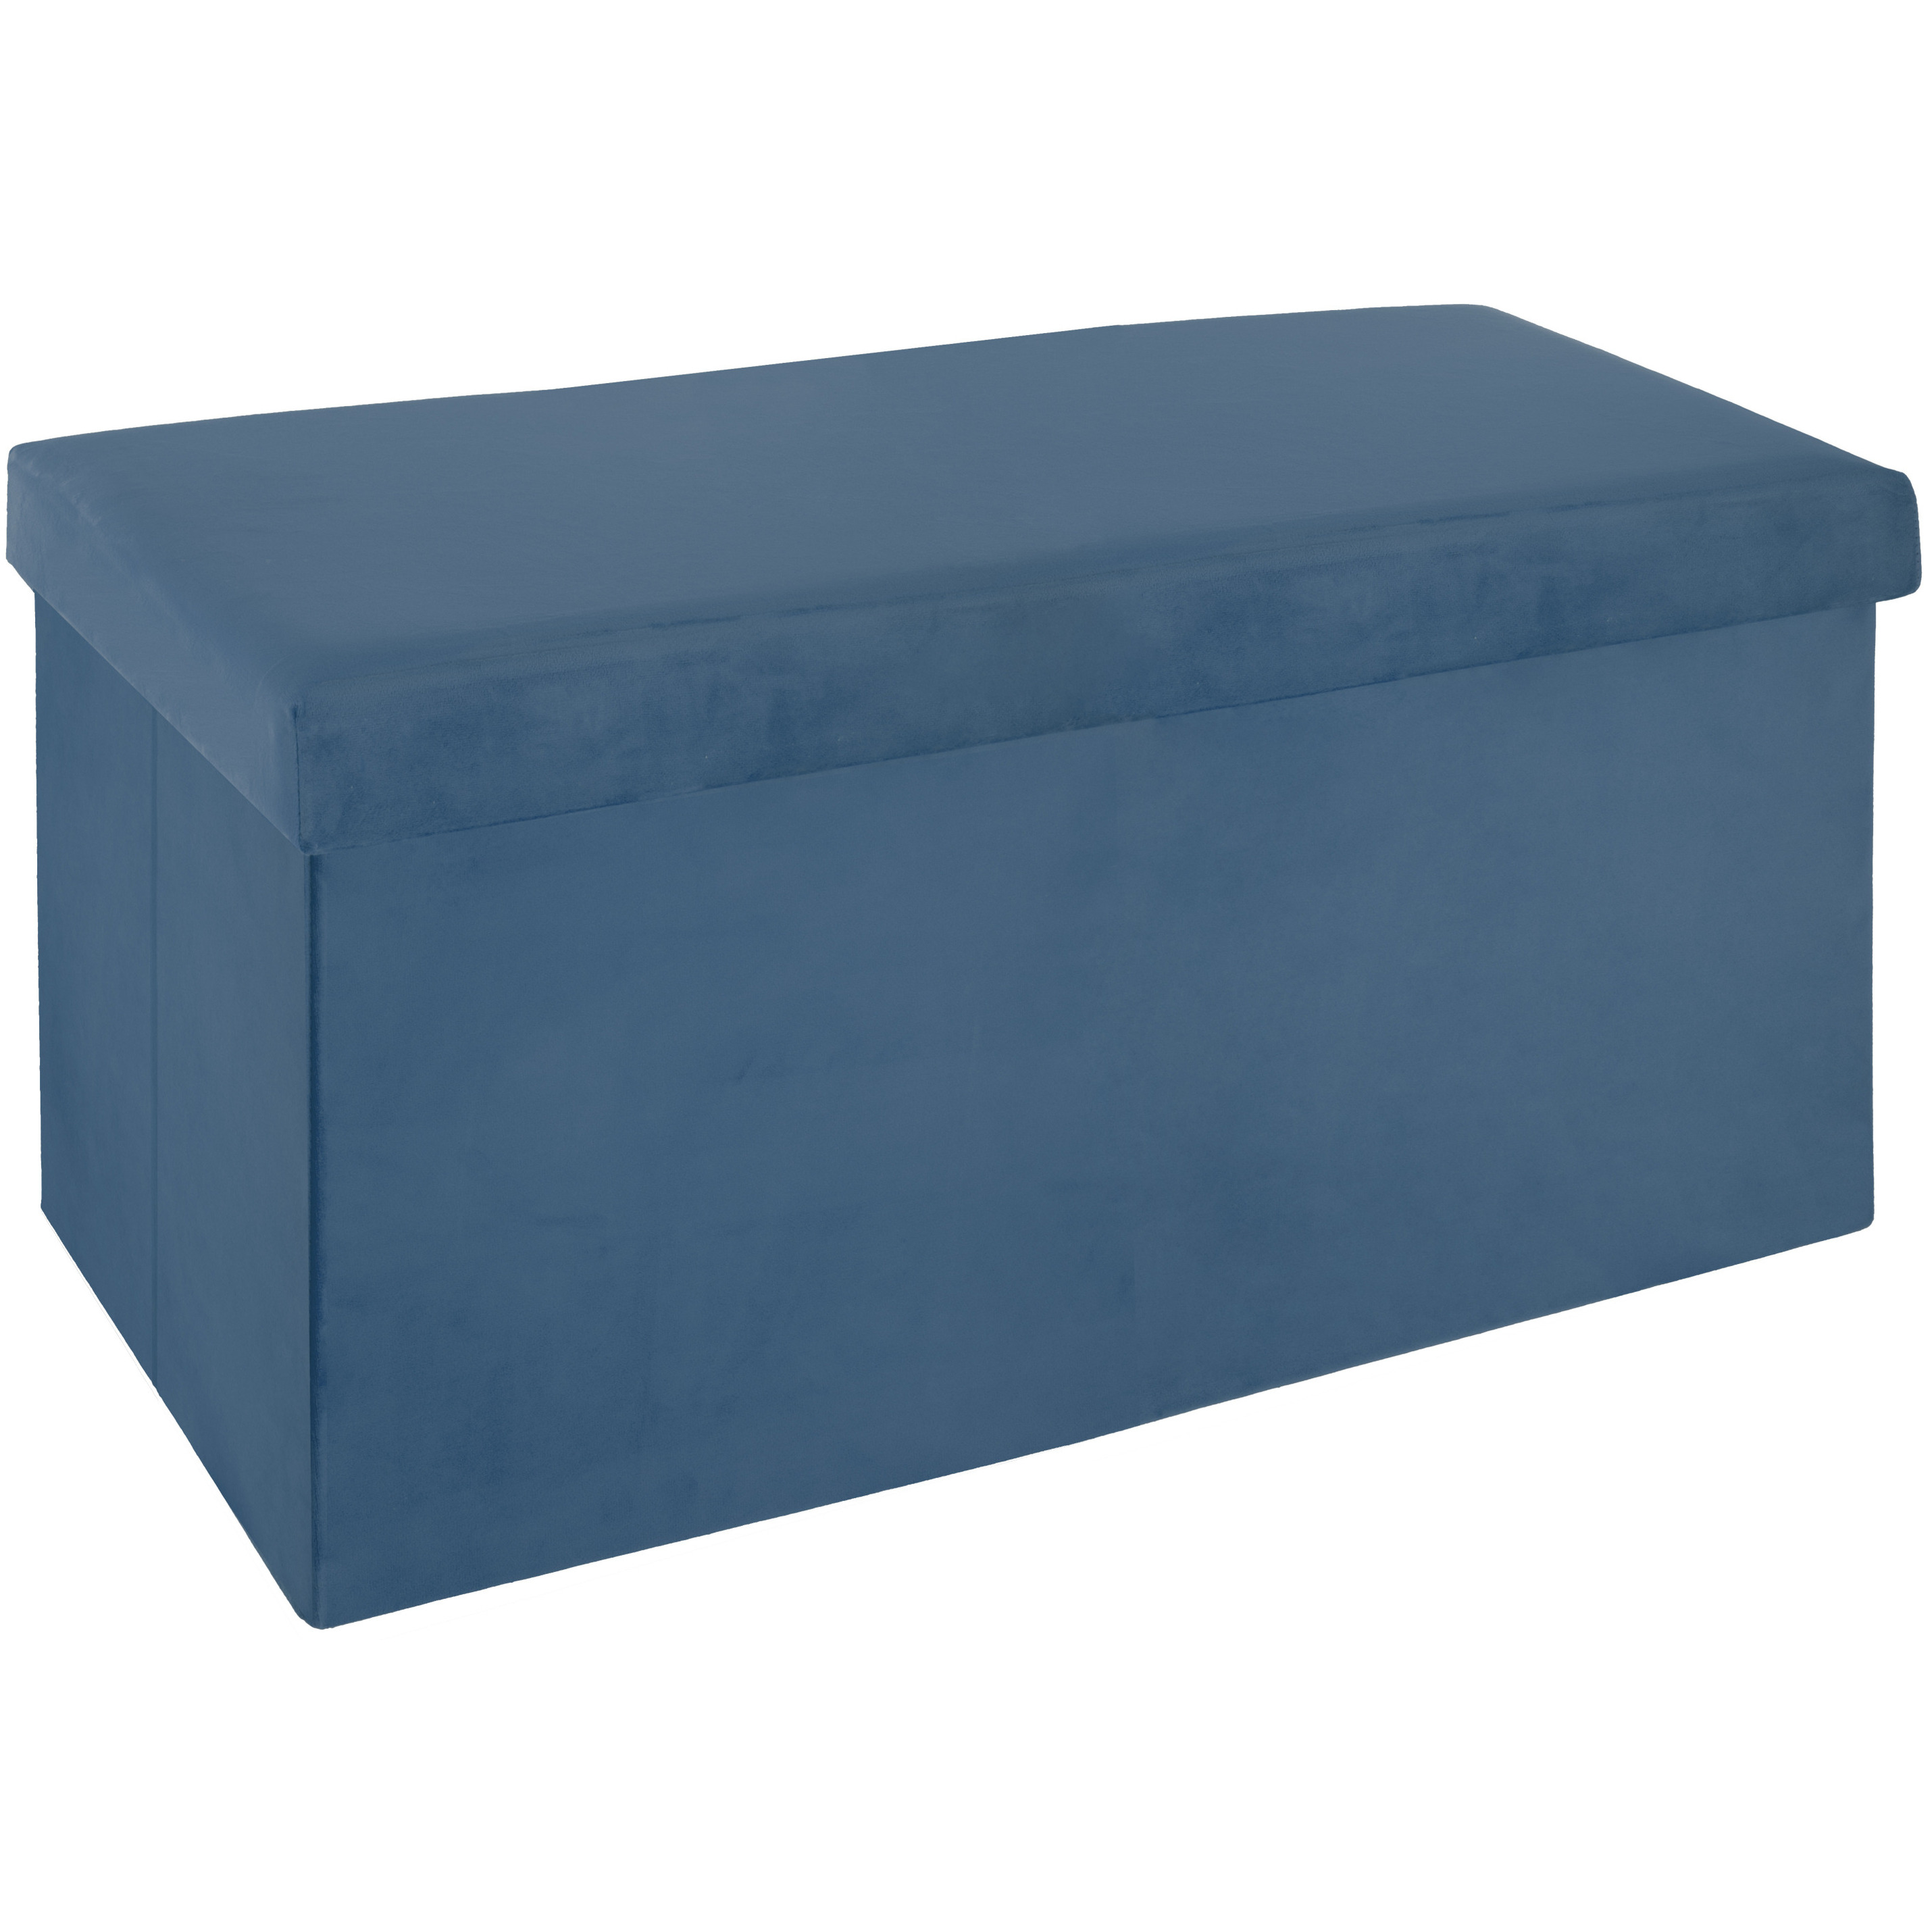 Poef-hocker opbergbox blauw kunststof-mdf 76 x 38 x 38 cm opvouwbaar